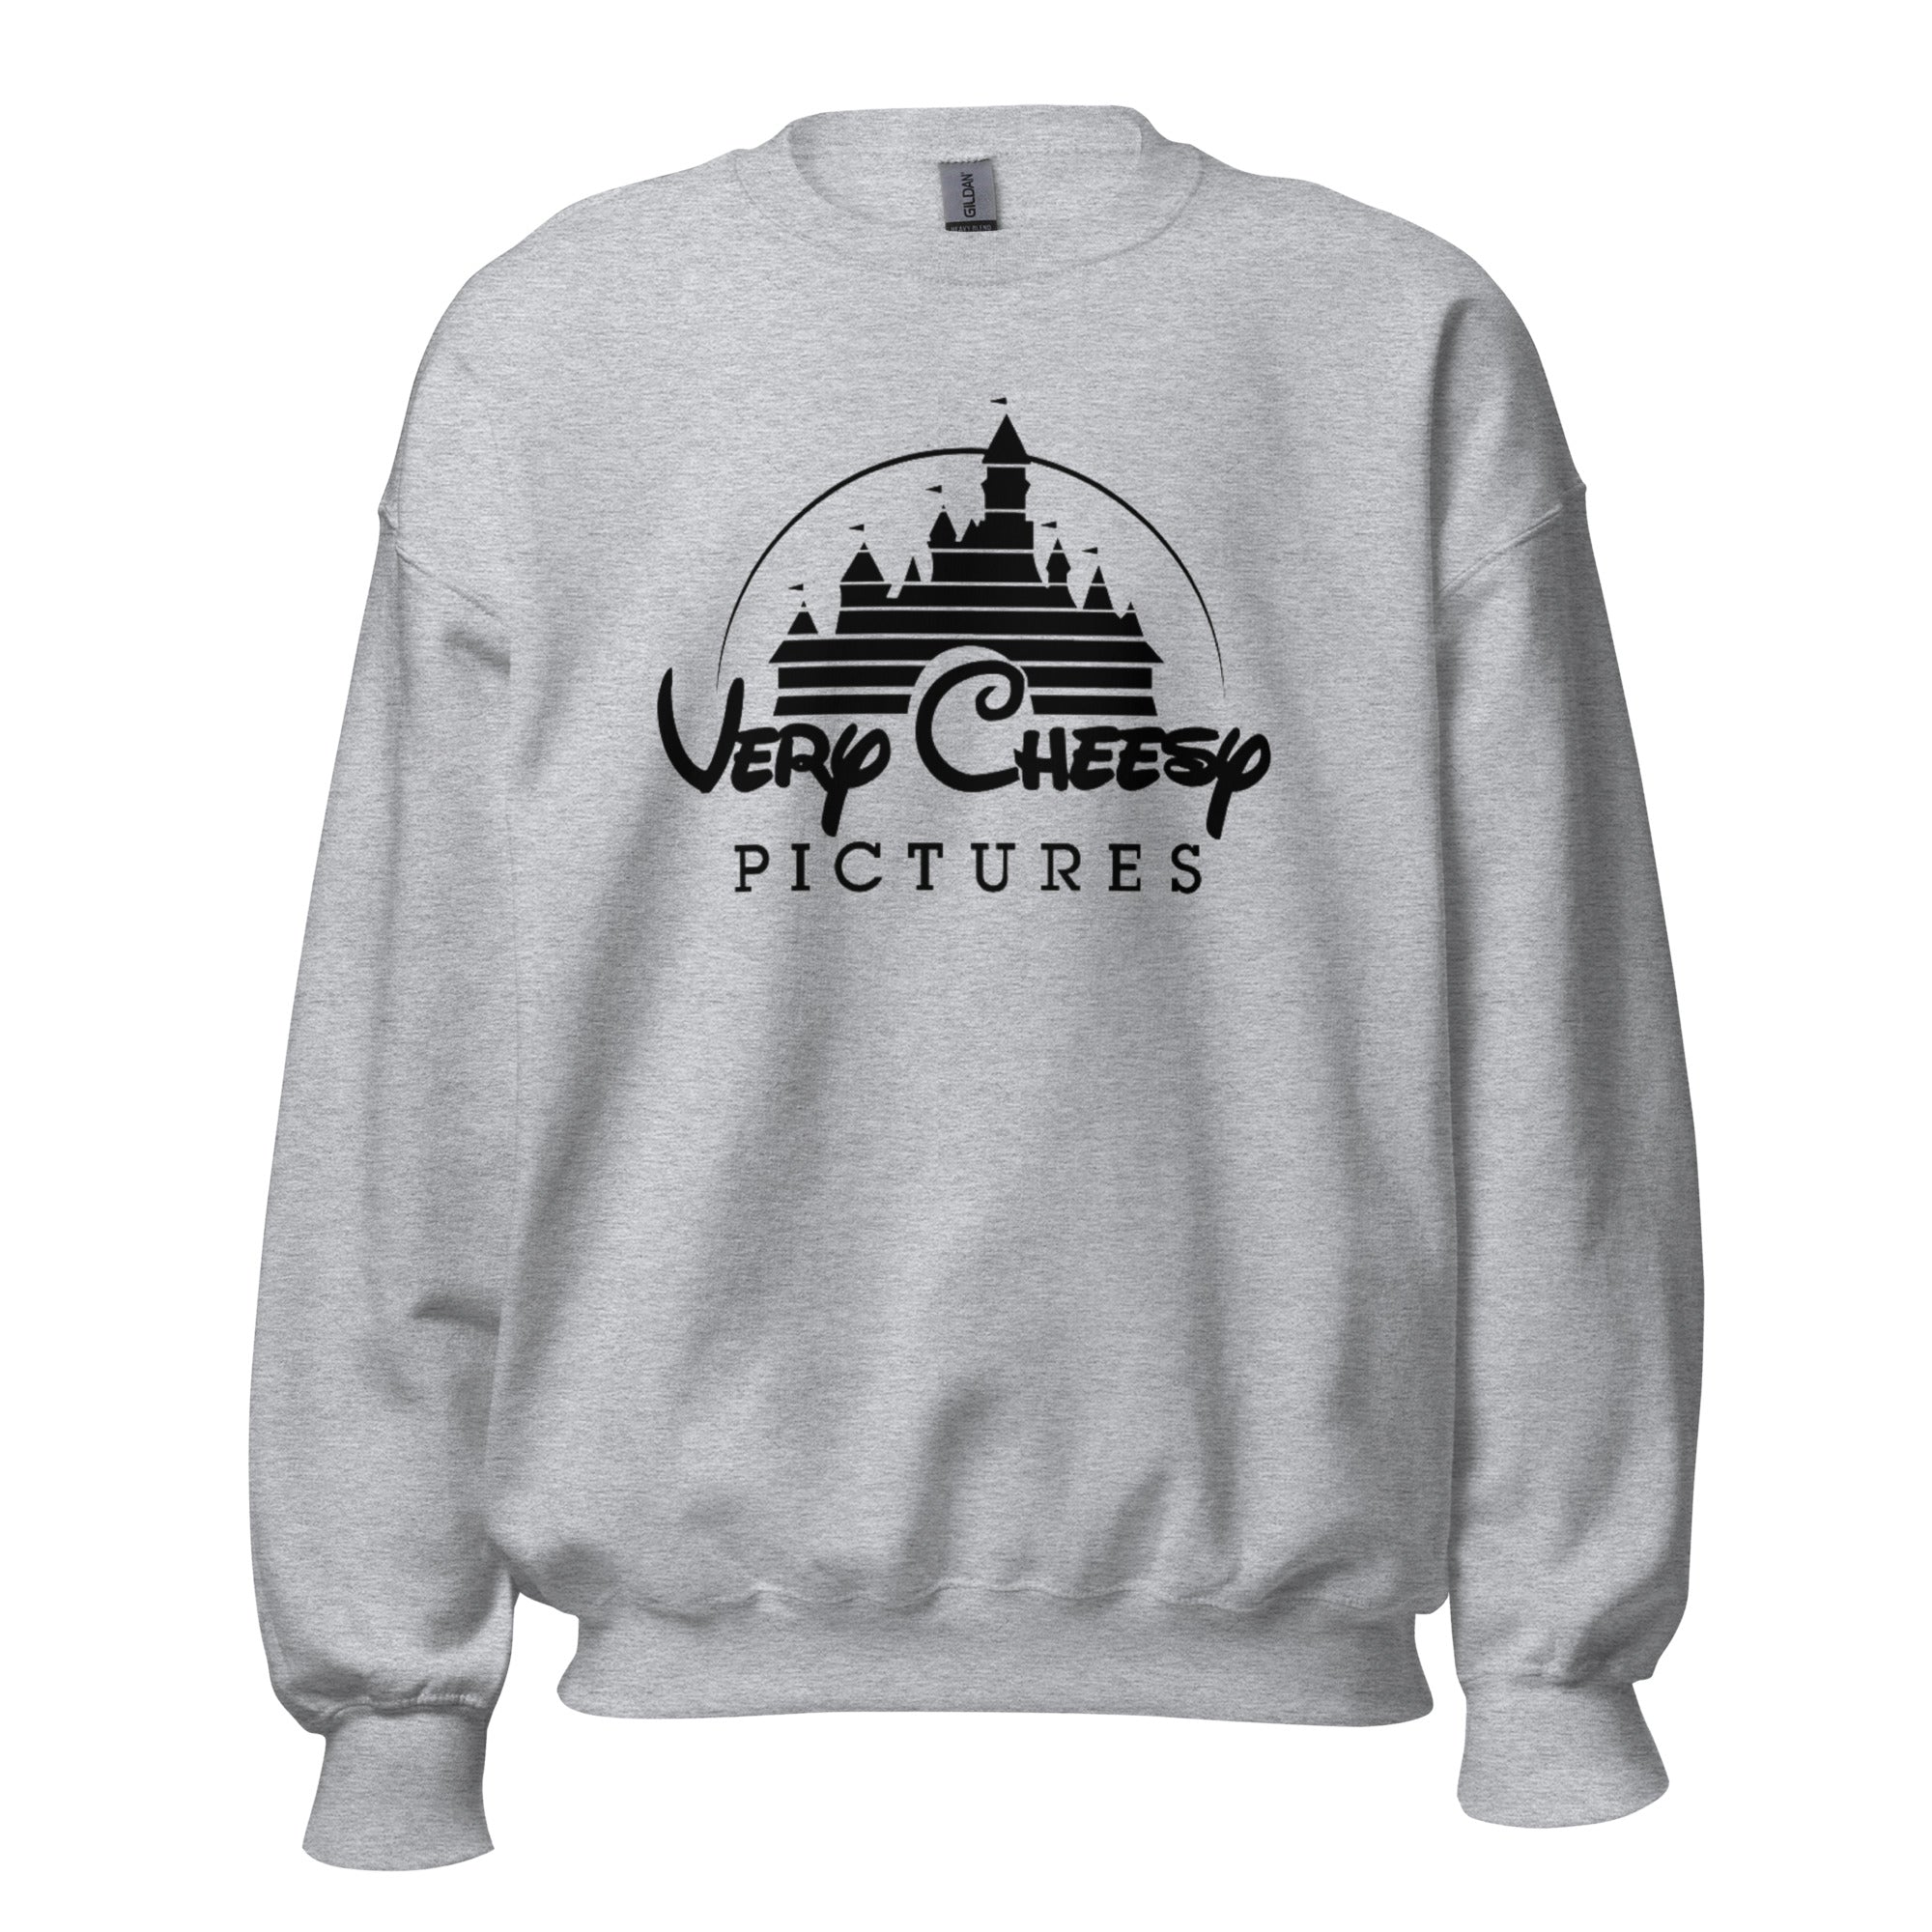 Unisex Crew Neck Sweatshirt - Very Cheesy Pictures - GRAPHIC T-SHIRTS